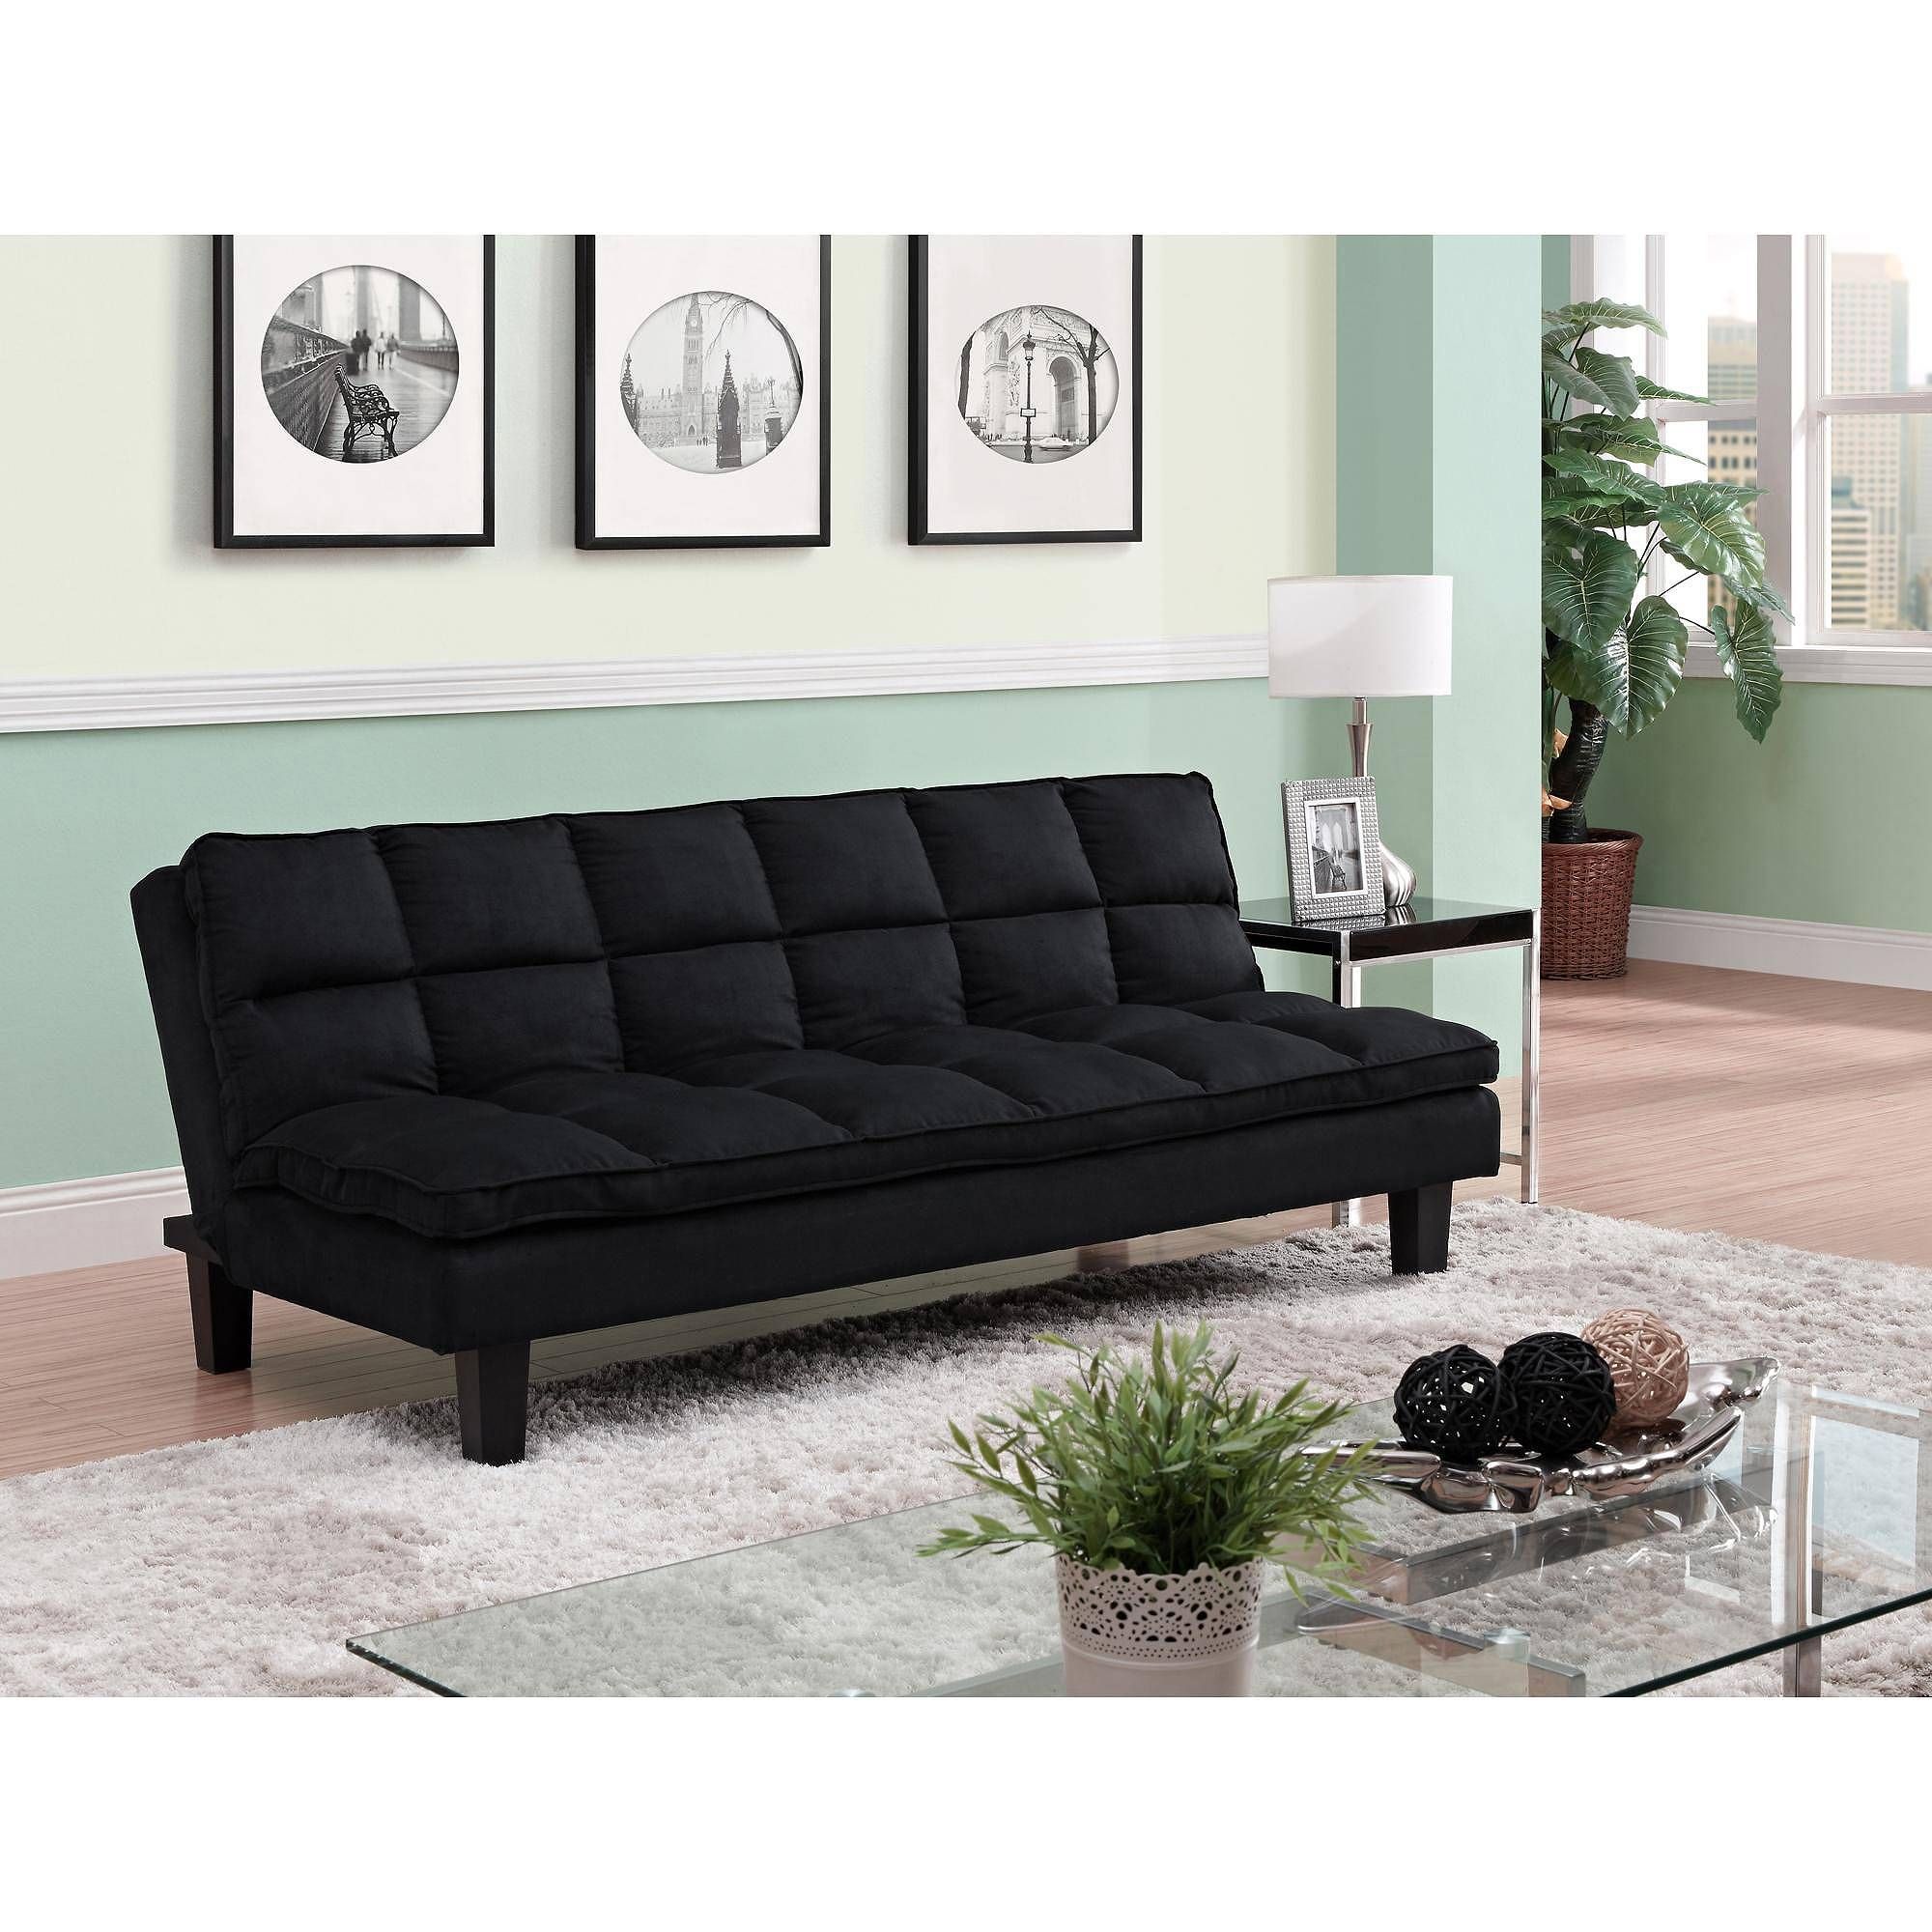 Allegra Pillow Top Futon, Black – Walmart Regarding Convertible Futon Sofa Beds (View 13 of 15)